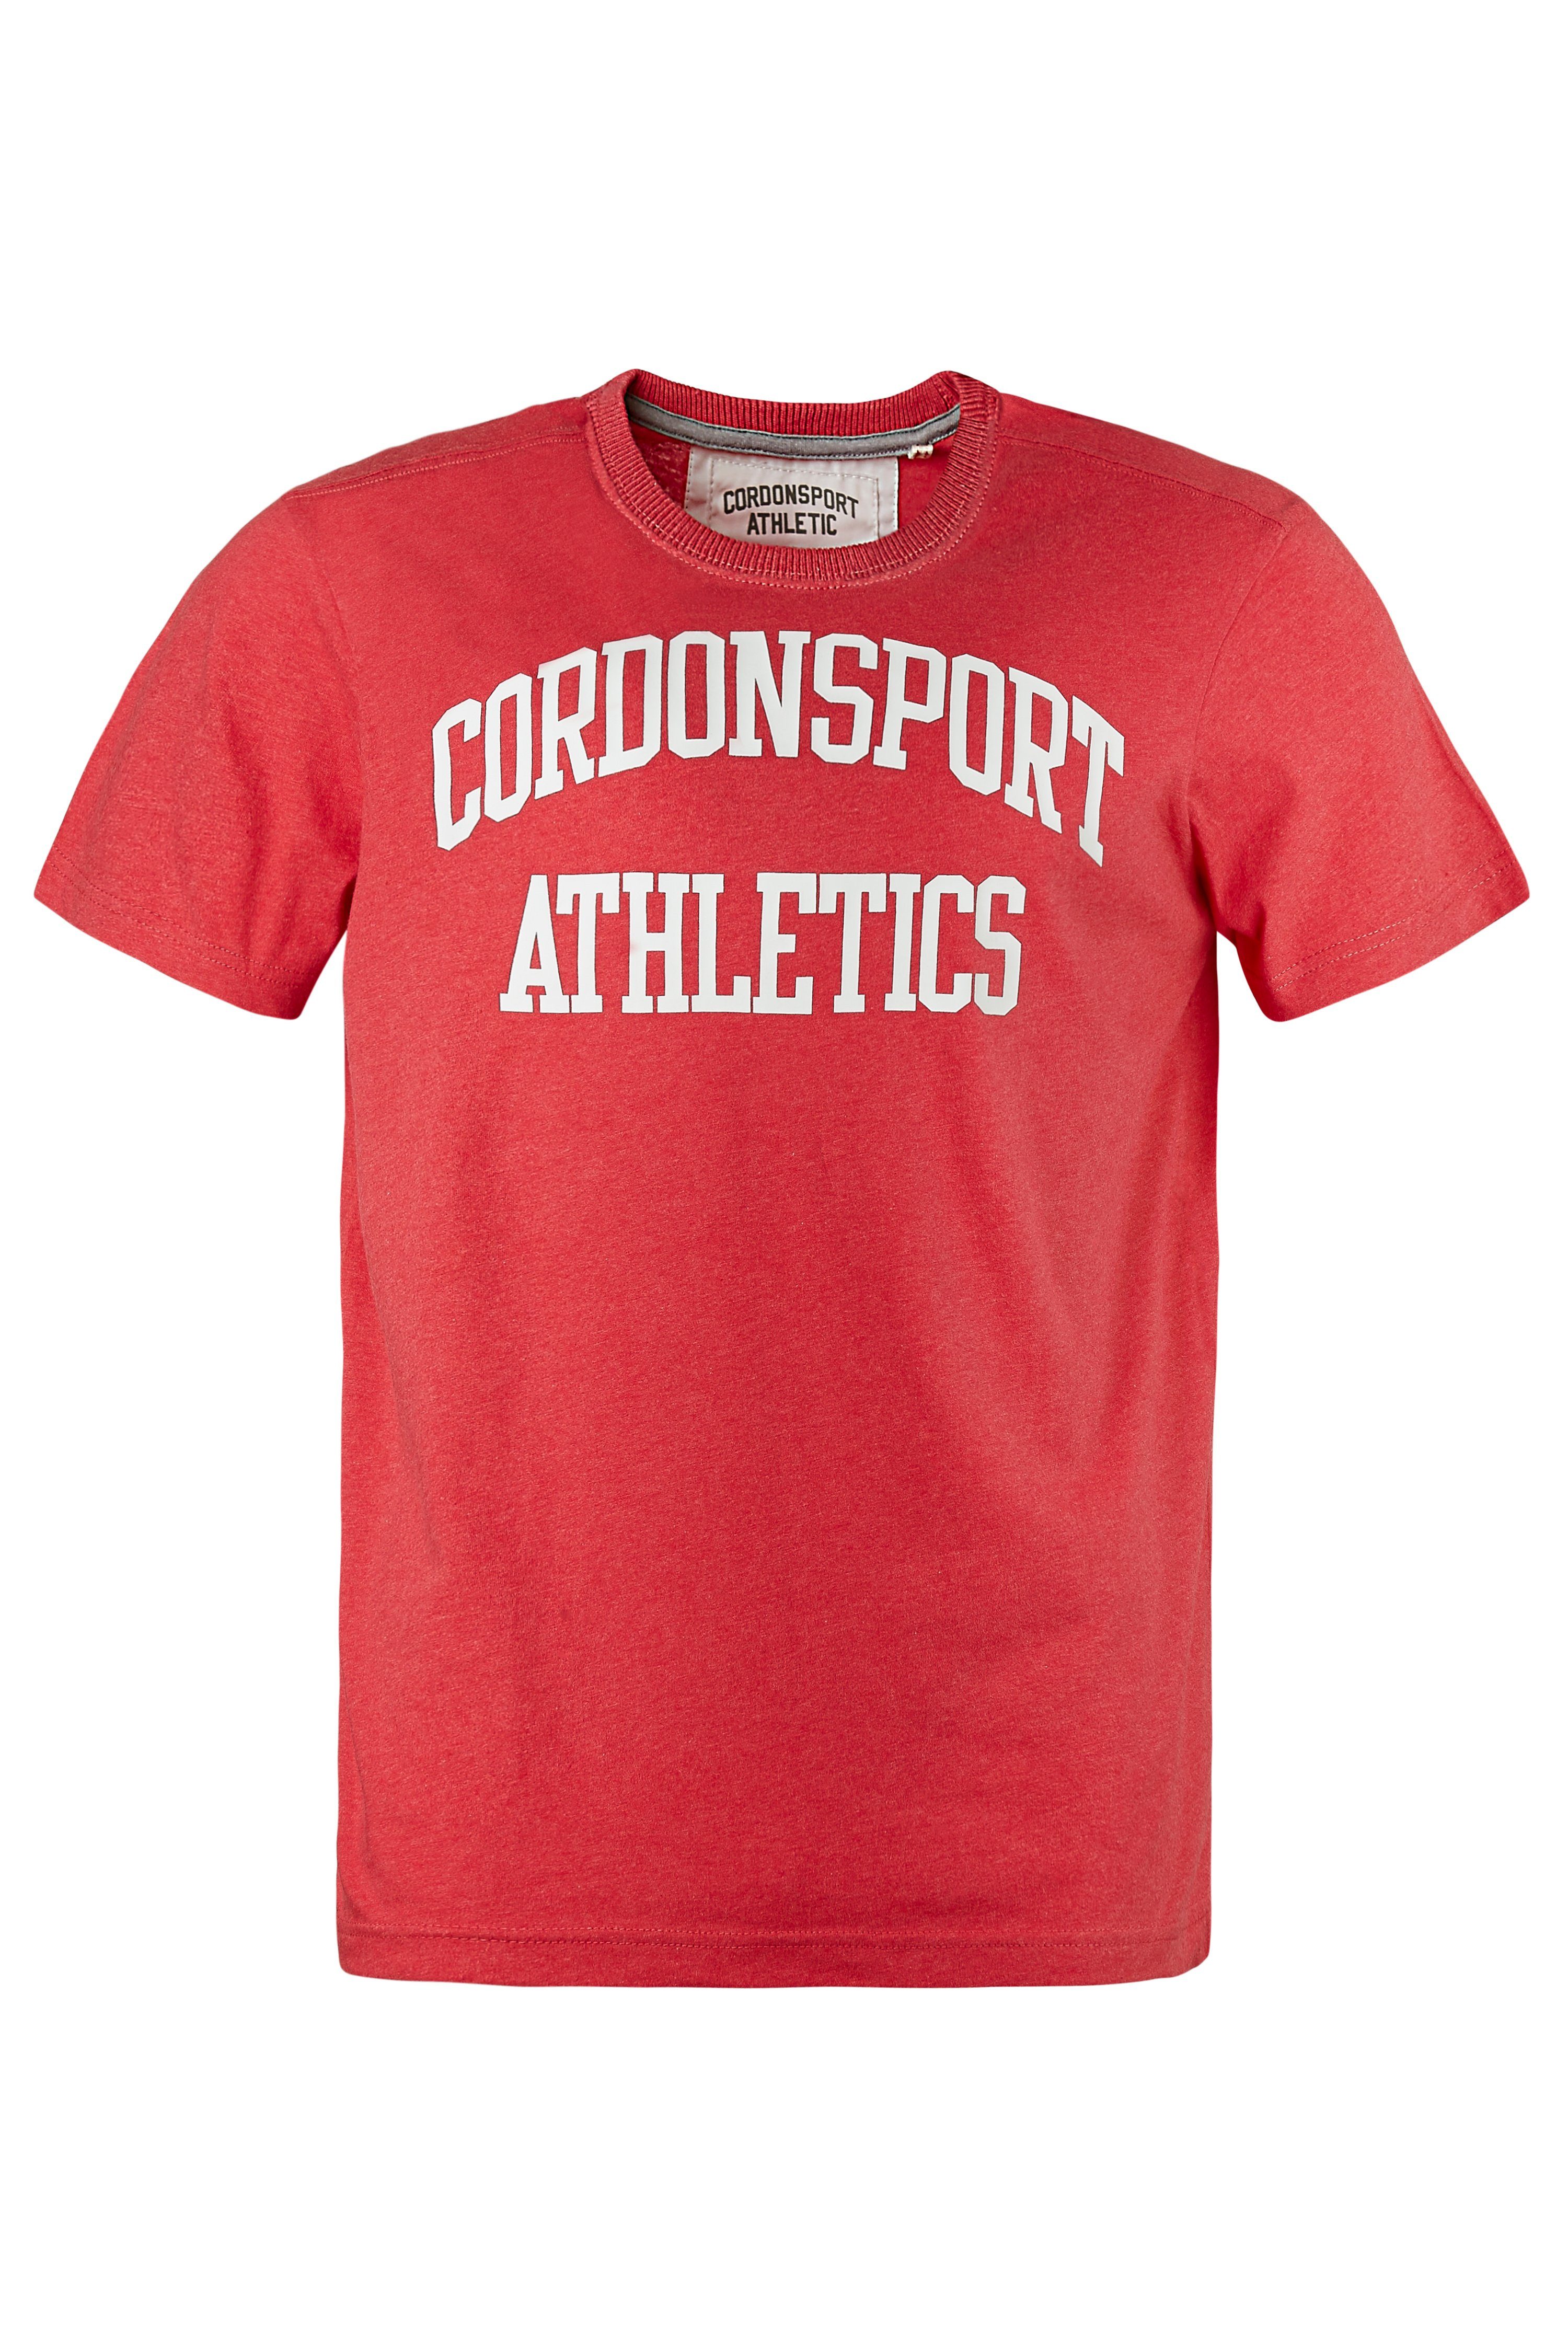 Cordon Sport T-Shirt ALEX 0130 55 red melange